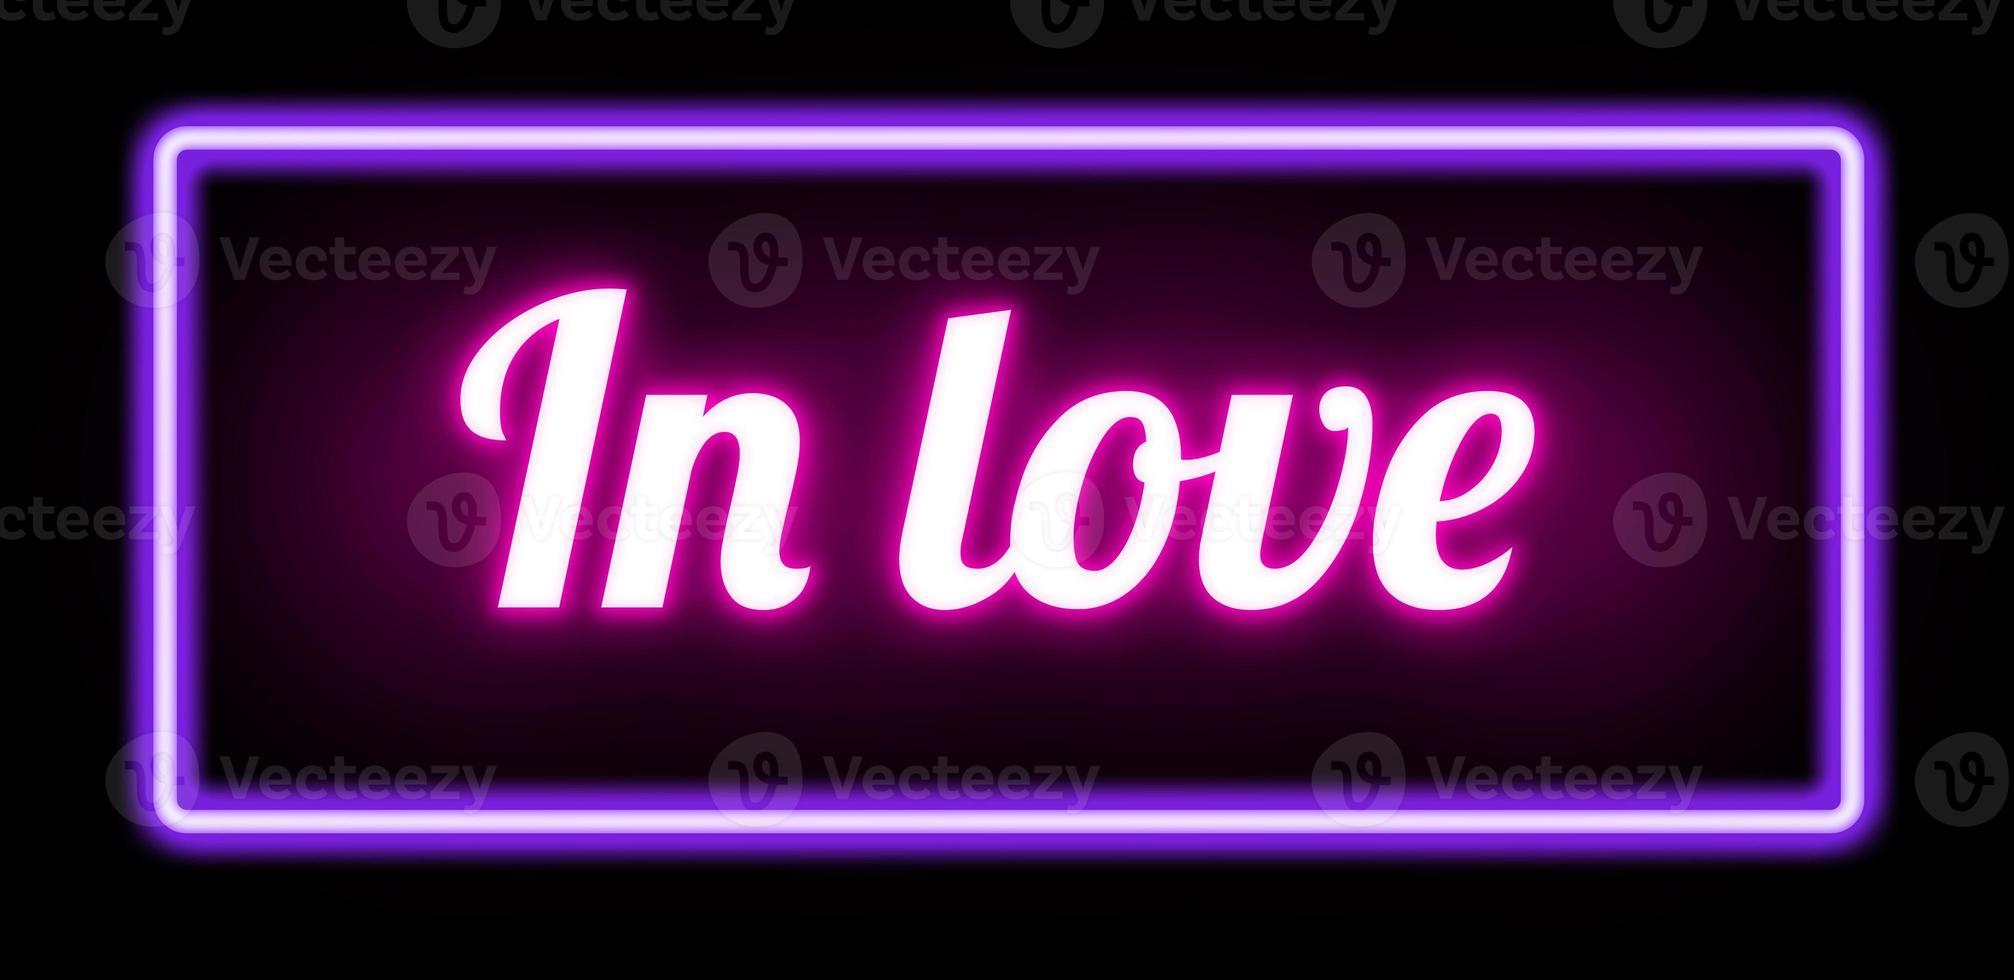 In Love neon banner. photo